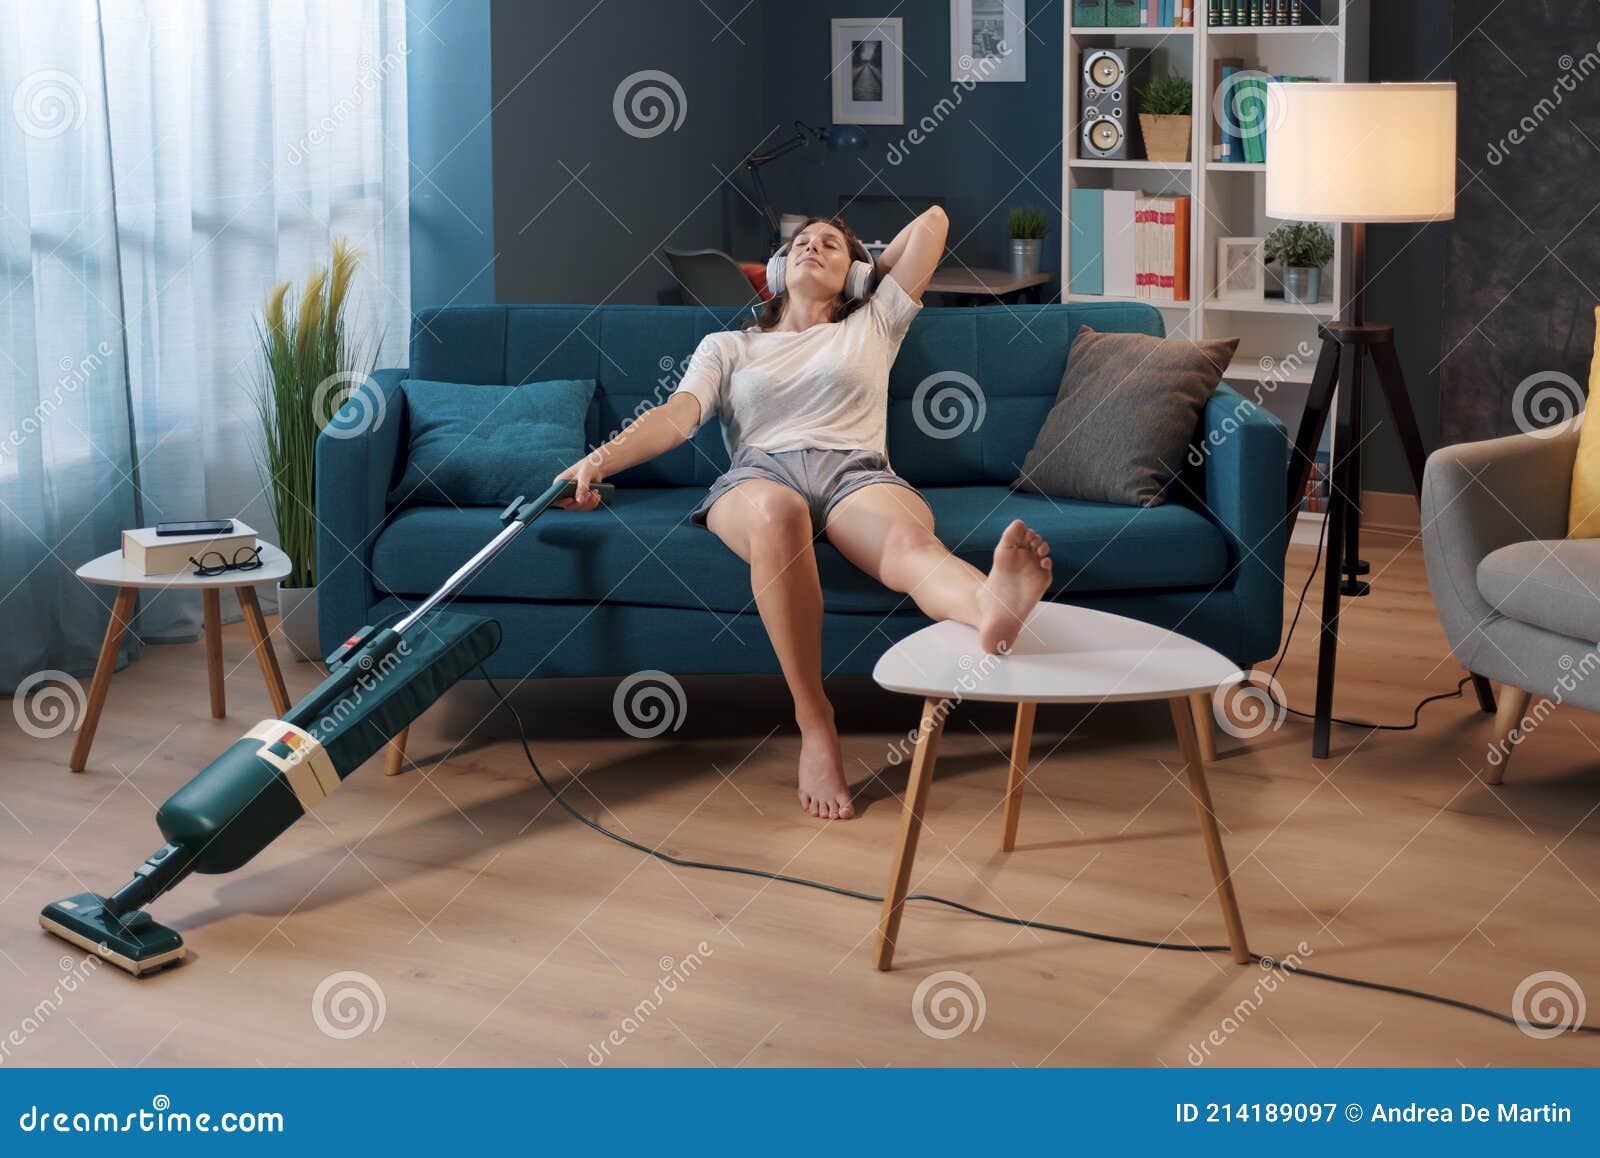 Lazy Housewife Procrastinating Chores Stock Image Image Of Cleaner Bored 214189097